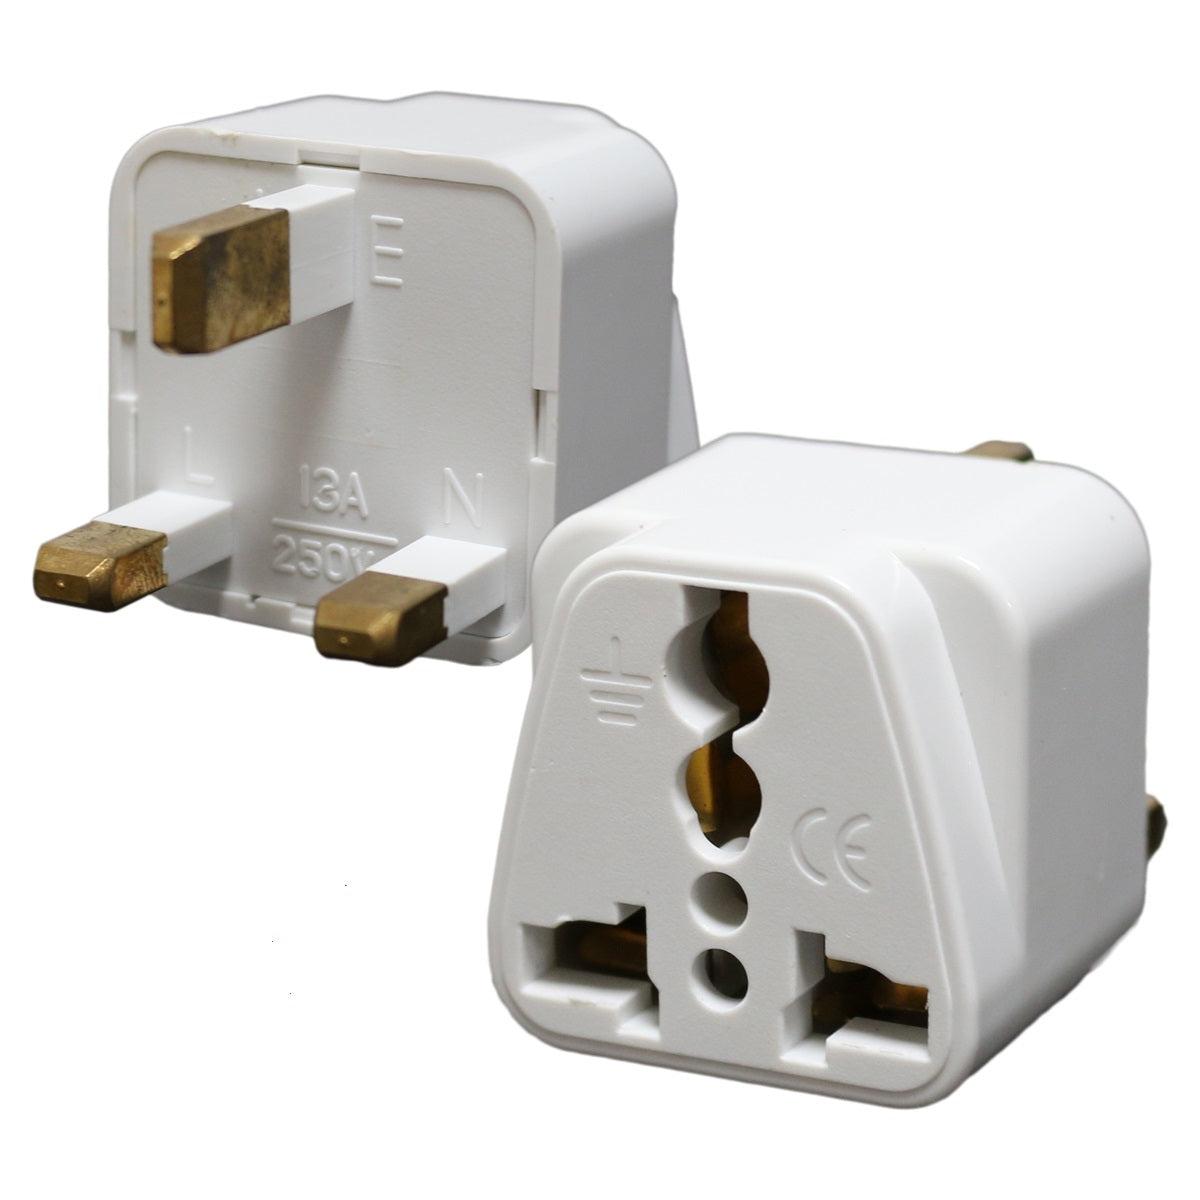 Charger Travel Adapter UK/Ireland 3 Pin Plug White